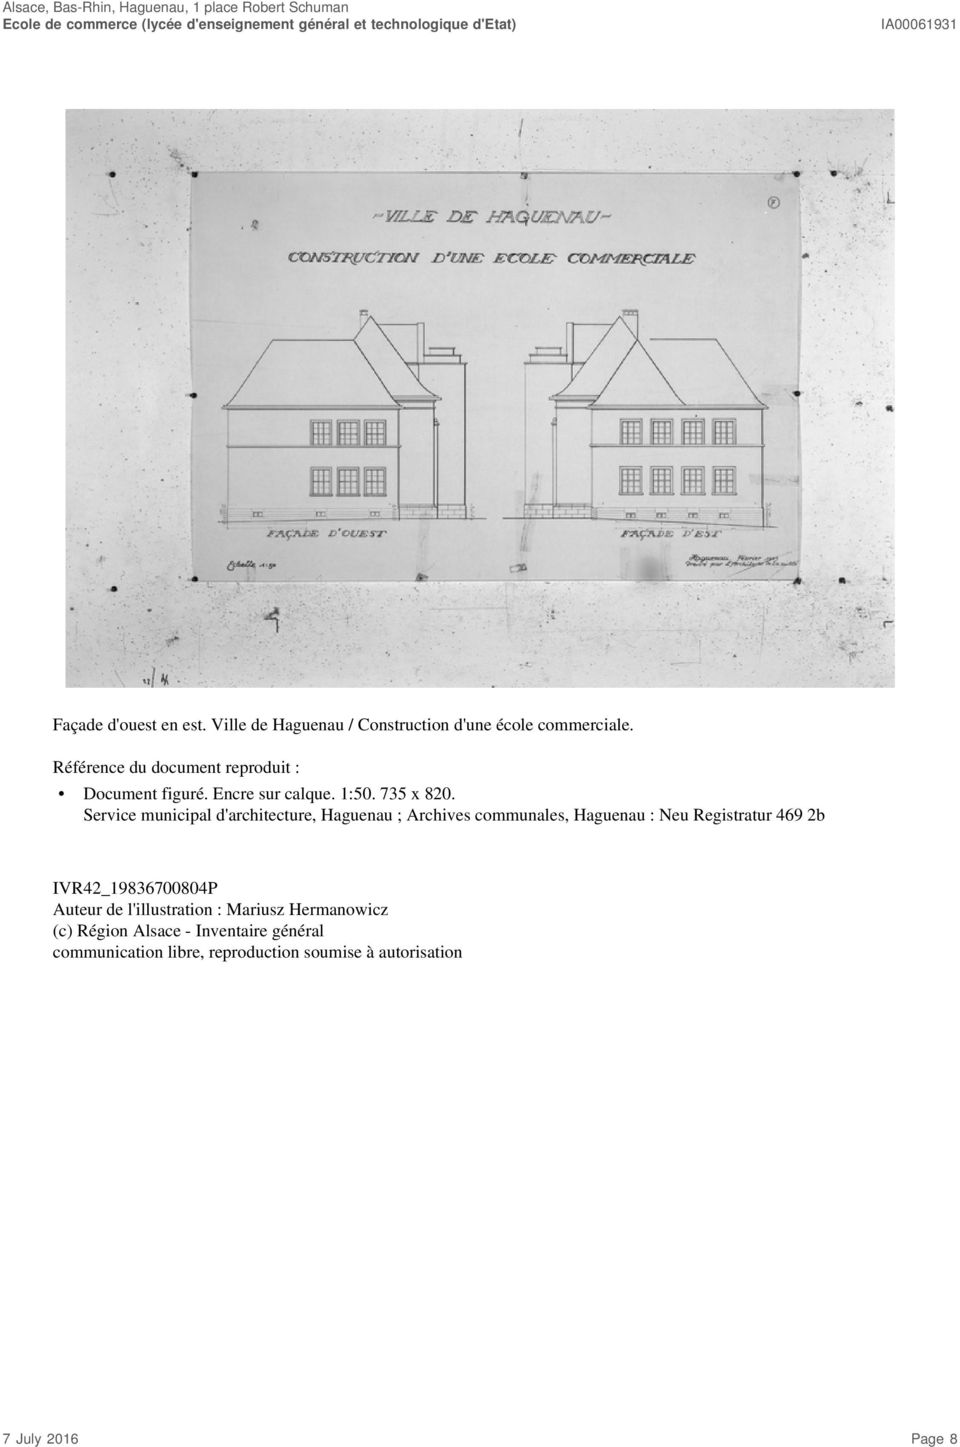 Service municipal d'architecture, Haguenau ; Archives communales, Haguenau : Neu